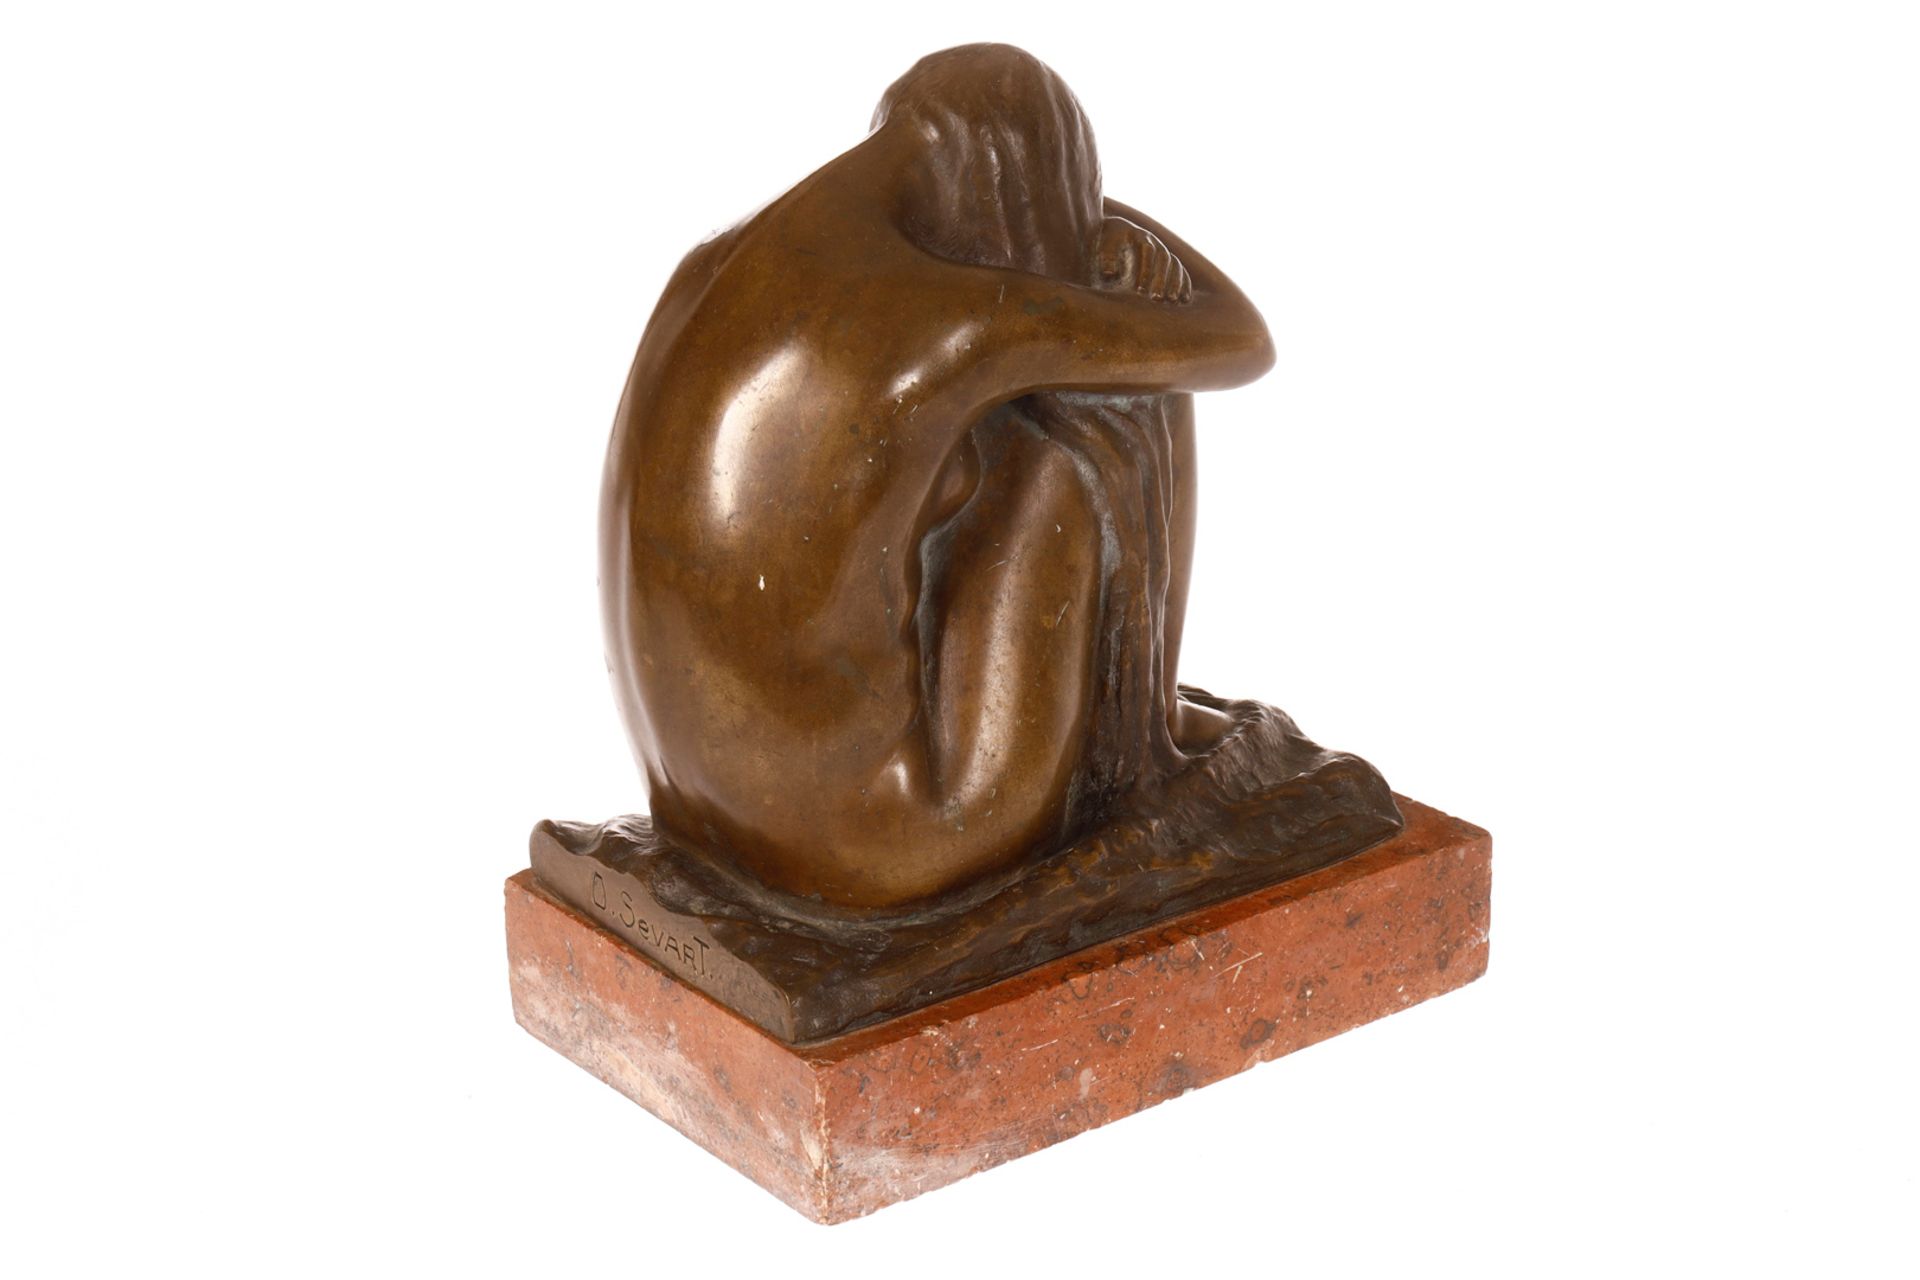 Bronzefigur ”Hockende”, um 1910, signiert O. Sevart, auf Marmorsockel, H 26 cm. - Image 2 of 2